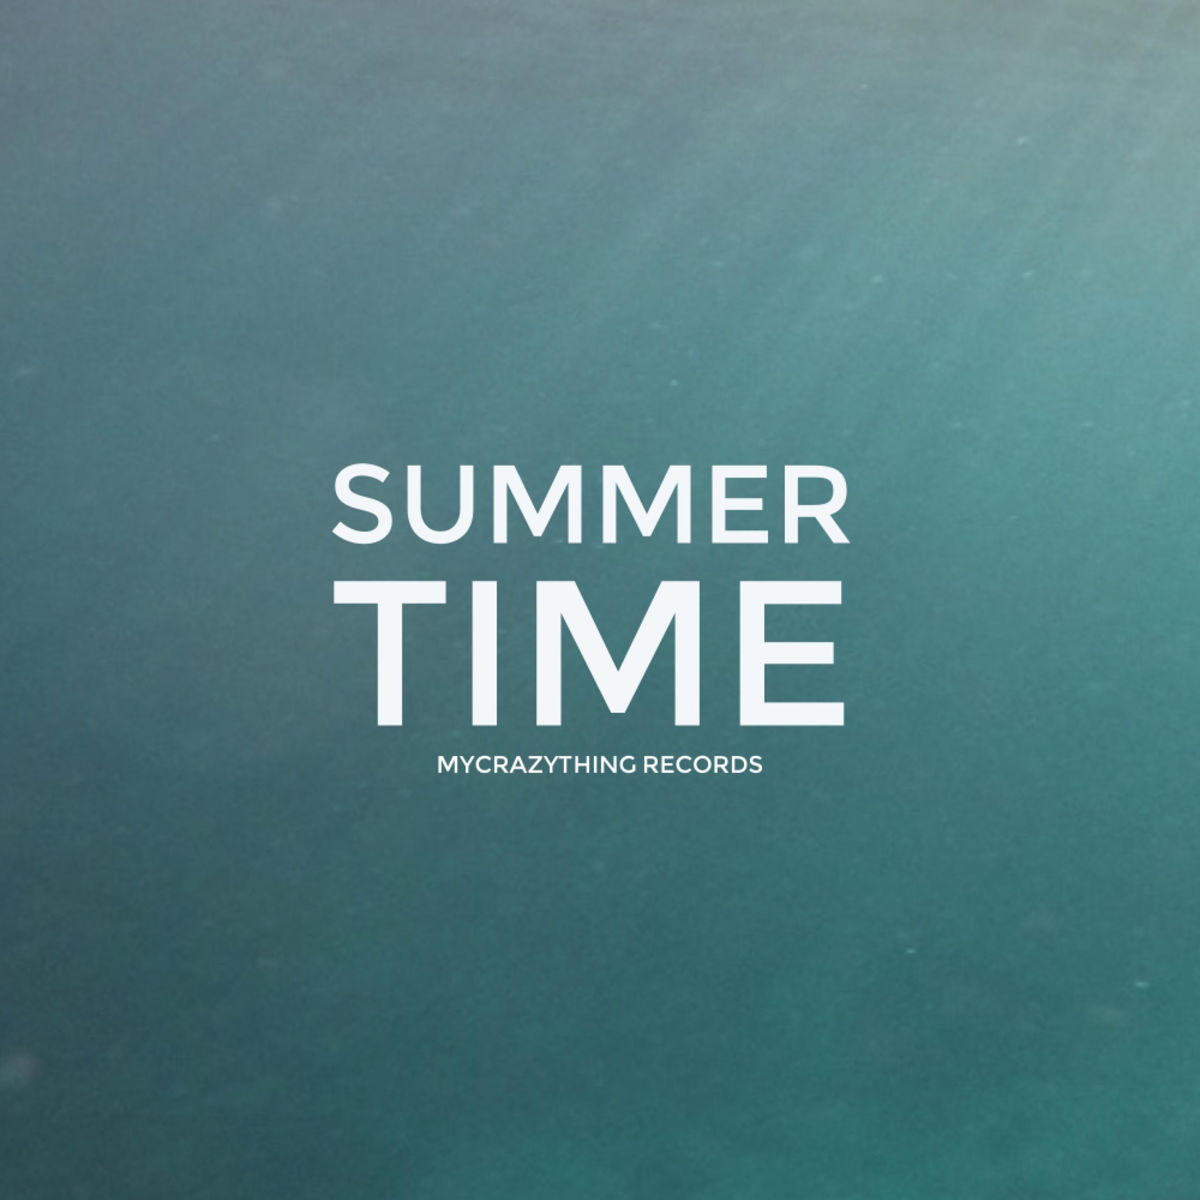 VA - Summer Time / Mycrazything Records